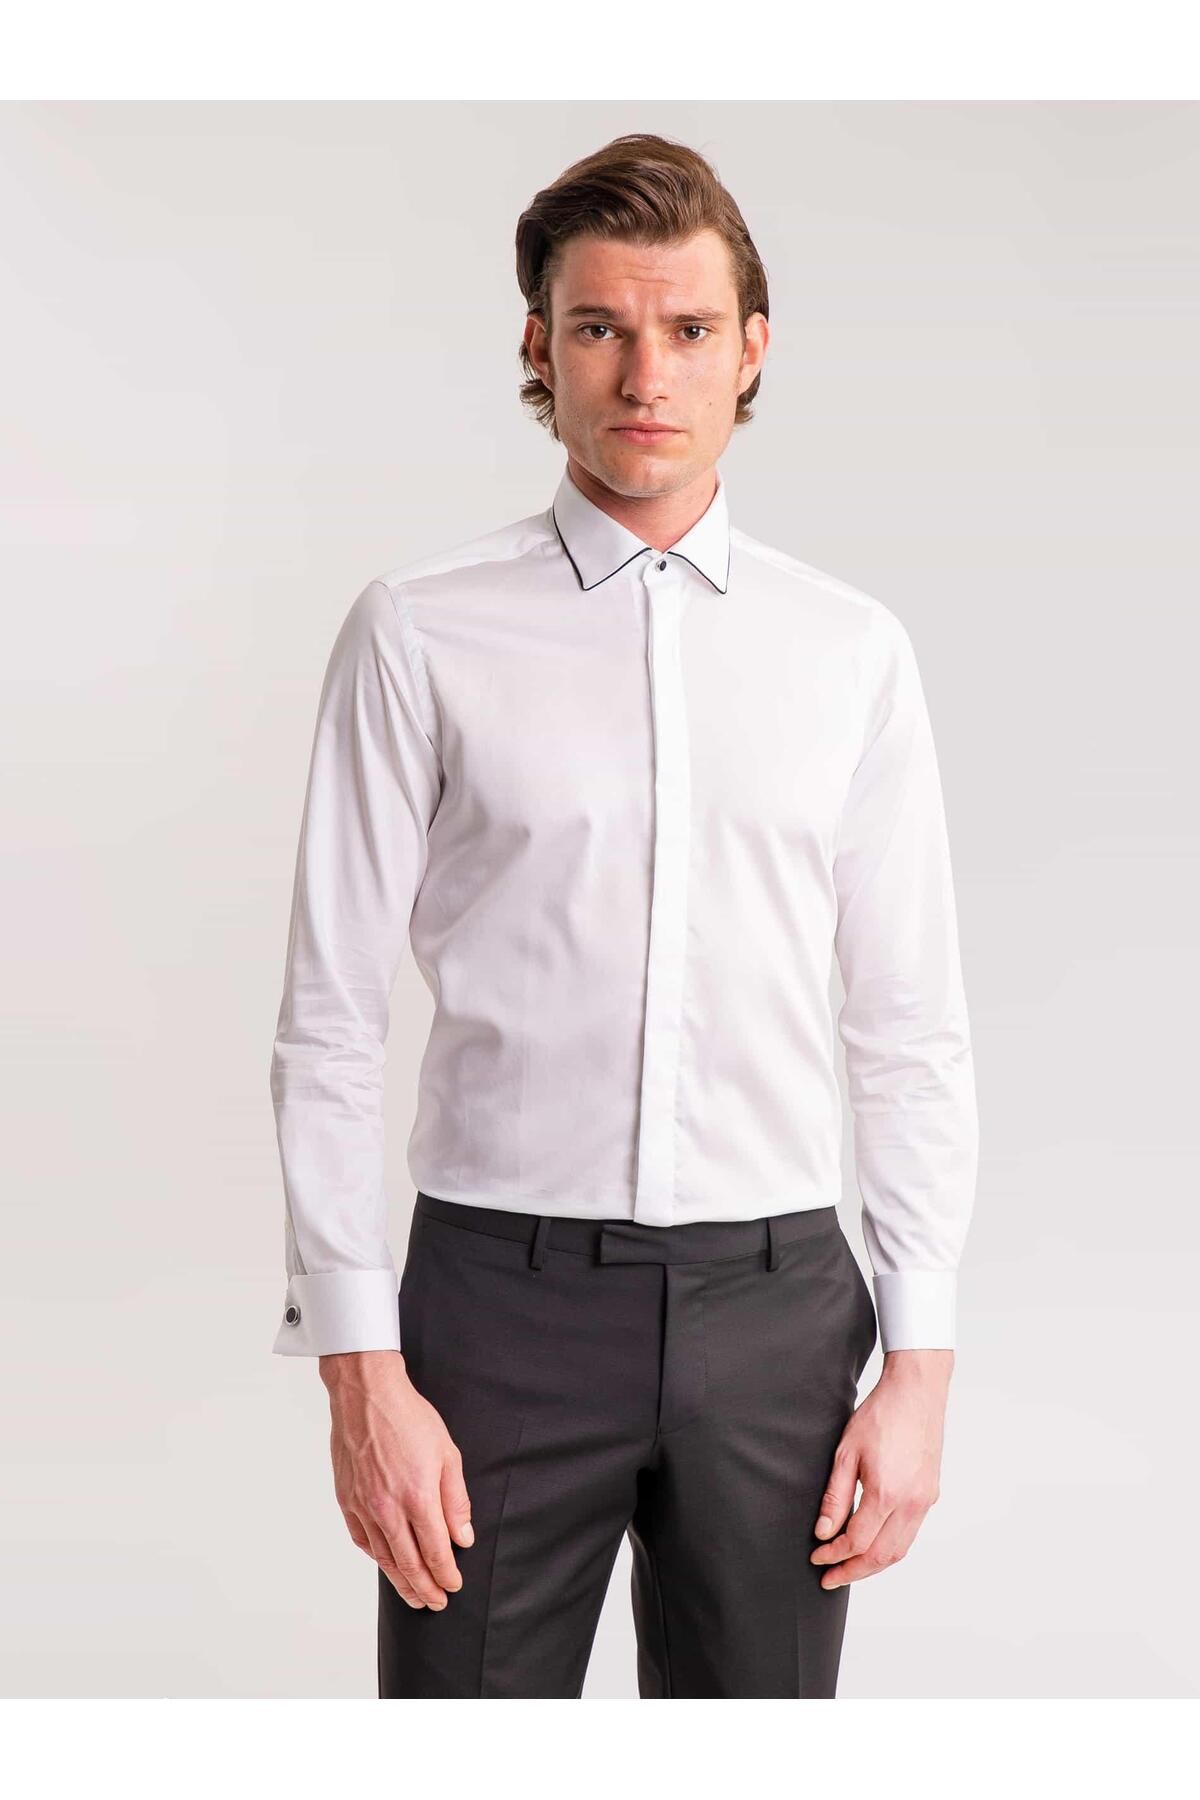 Dufy Beyaz Erkek Slim Fit Düz Brent Yaka Uzun Kol Gömlek - 60895